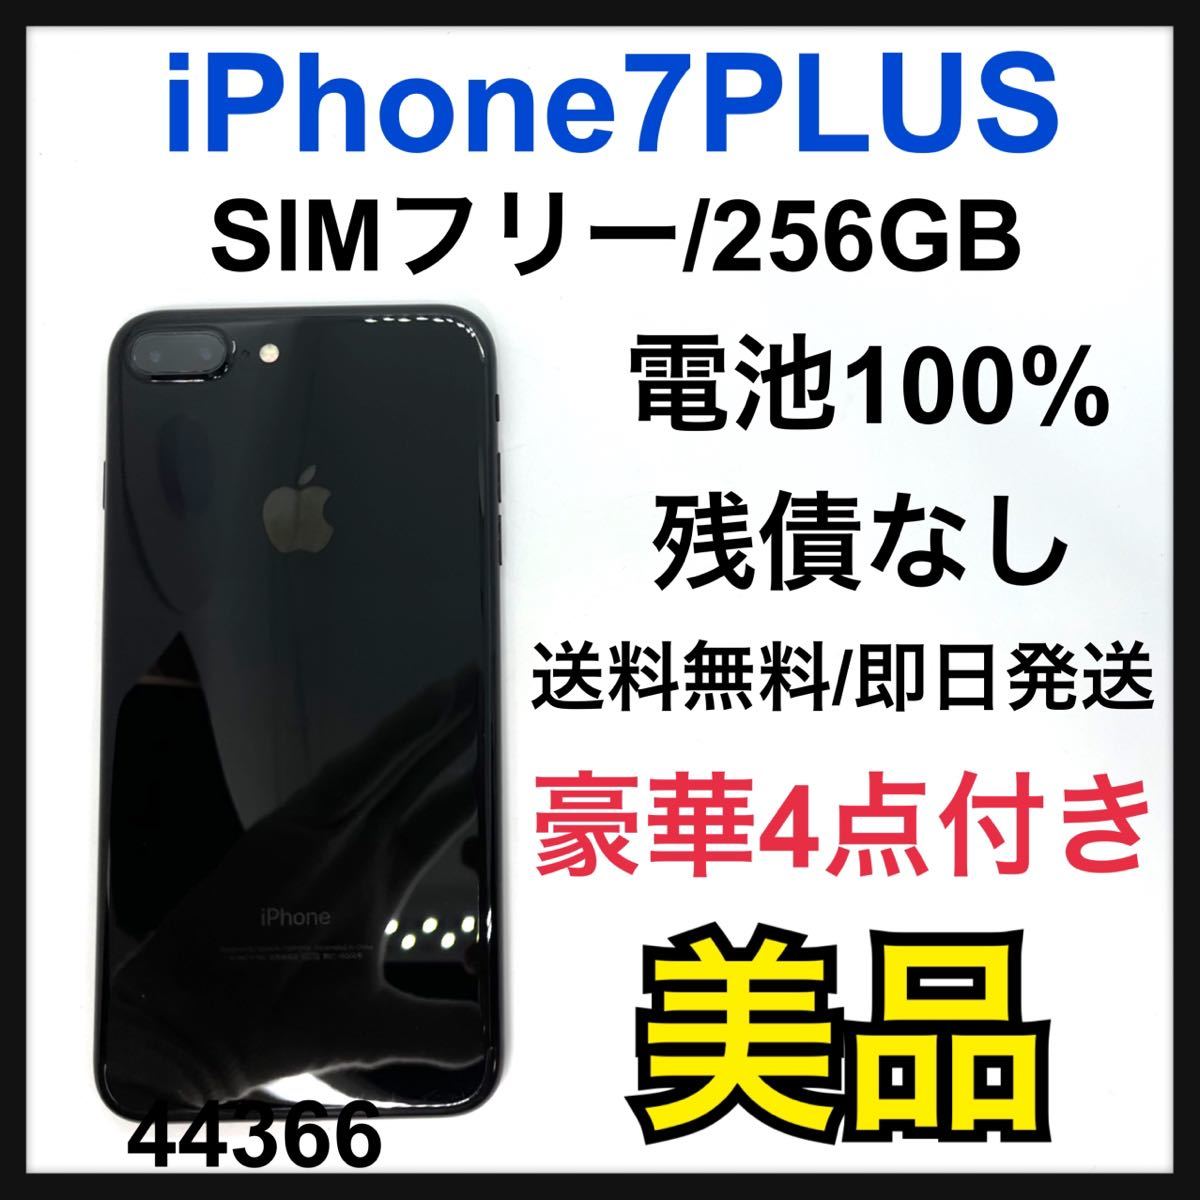 iPhone 7 Plus Jet Black 256 GB SIMフリー - 携帯電話